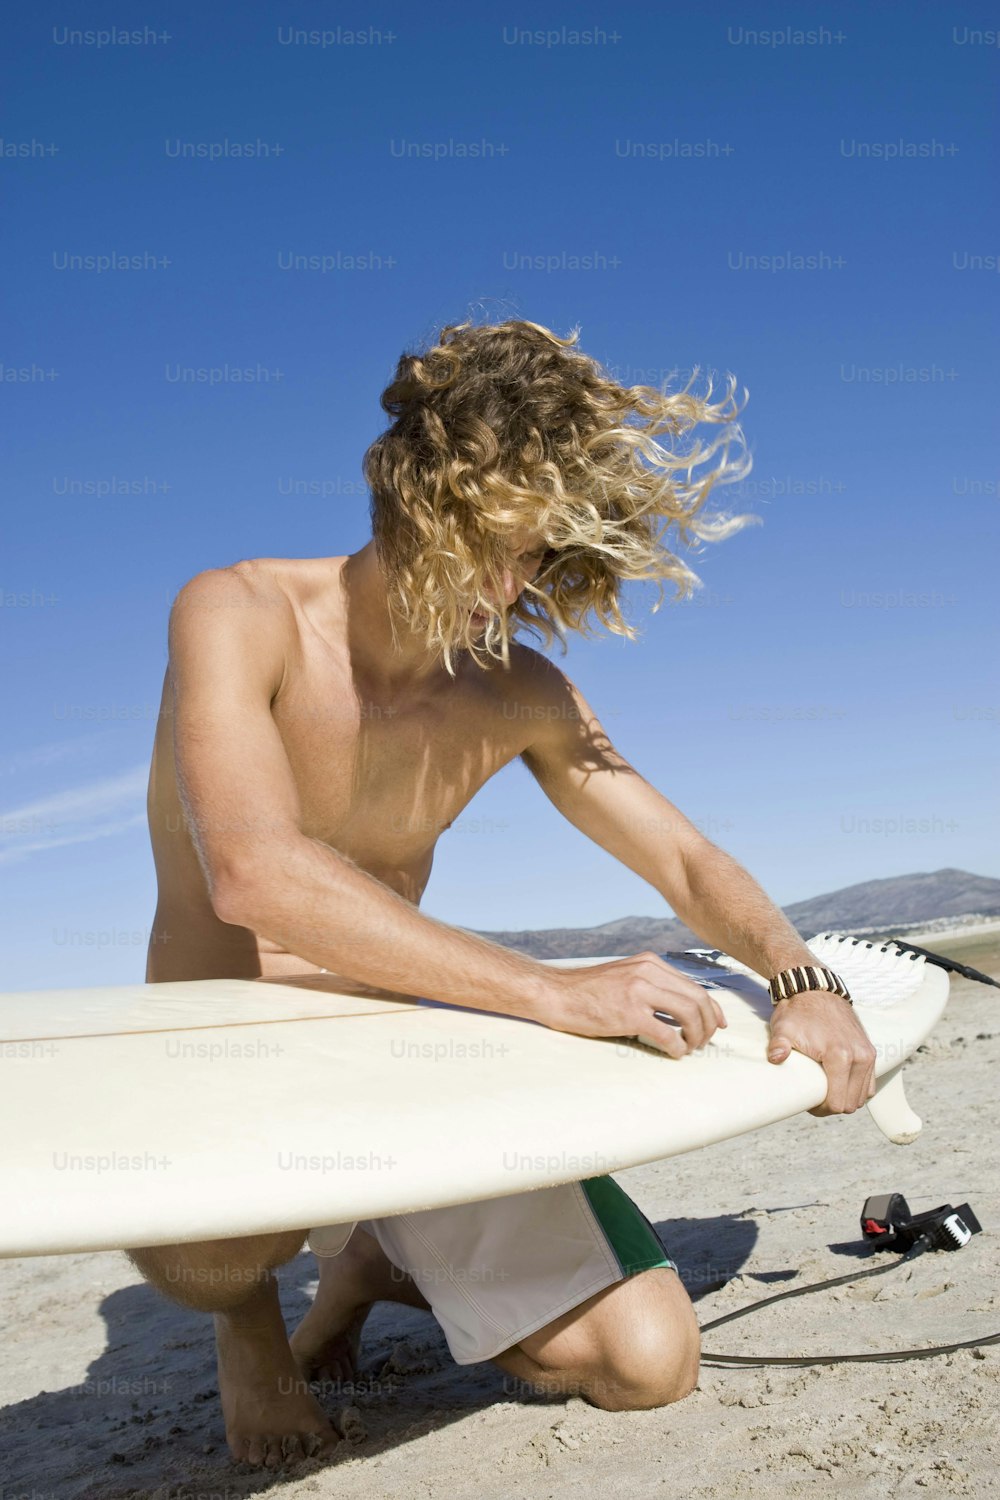 a man sitting on a beach holding a surfboard